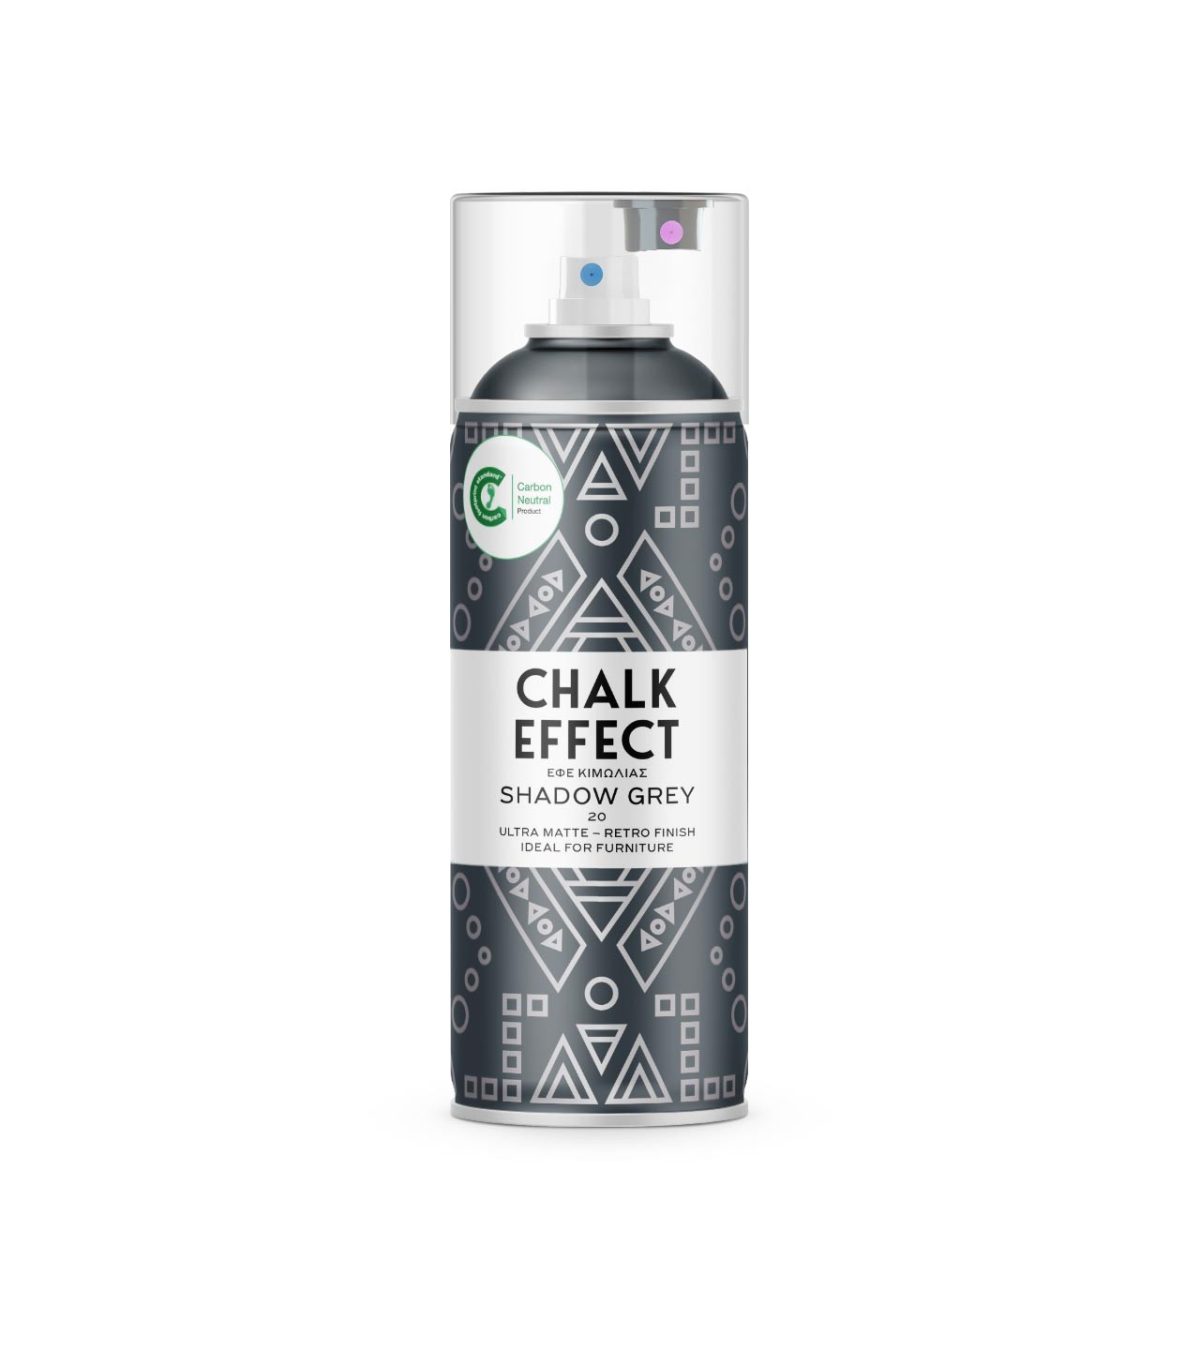 chalk-effect-n20-shadow-grey-cosmos-lac-aerosol-spray-paint-acrylic-diy-upscale-wood-decor-interior-exterior-inhouse-design-deco-1280x1440-crop